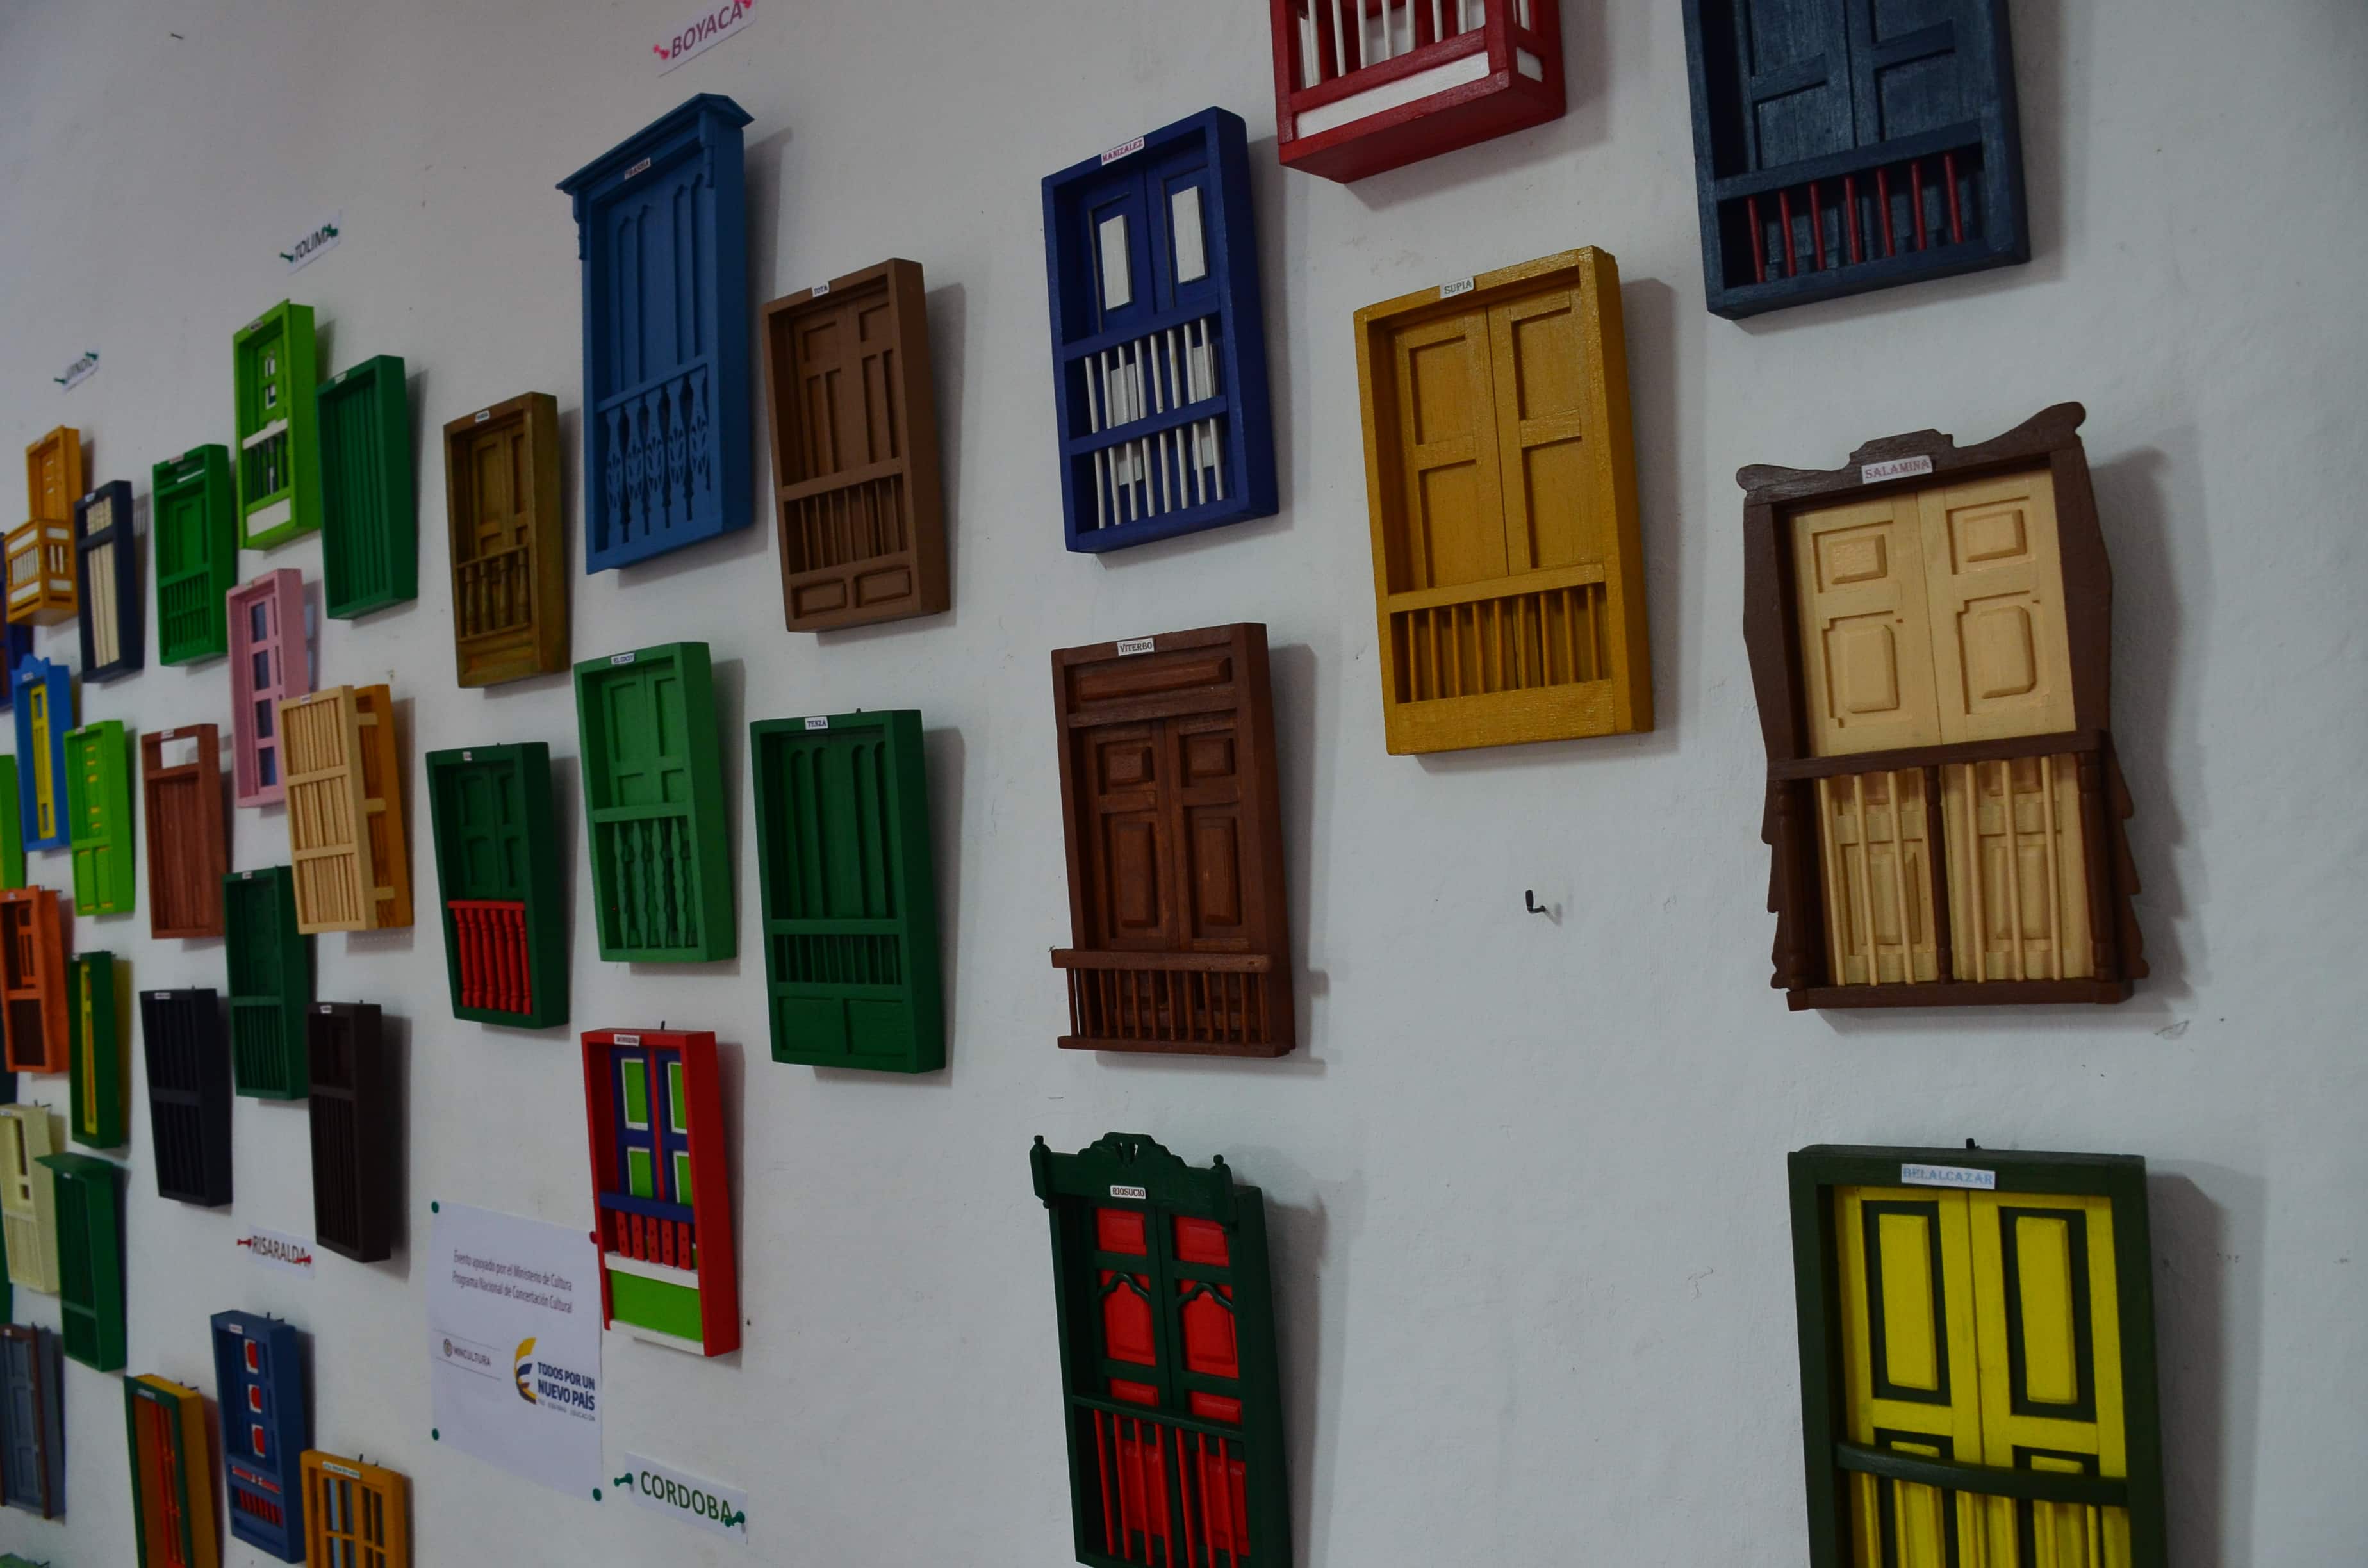 Balcony exhibit at the Cultural Center in Buga, Valle del Cauca, Colombia